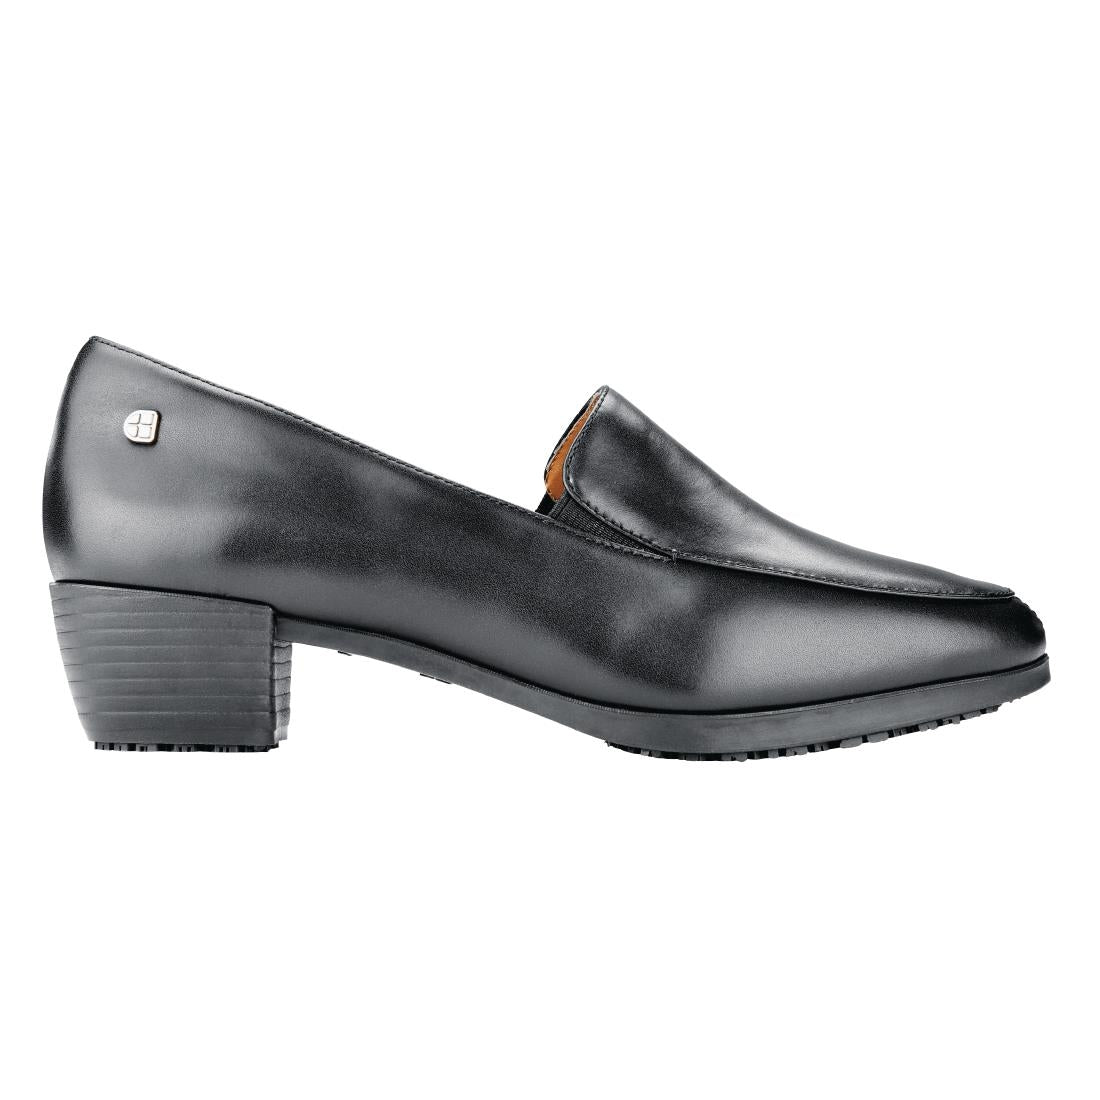 BB605-35 Shoes for Crews Envy Slip On Dress Shoe Black Size 35